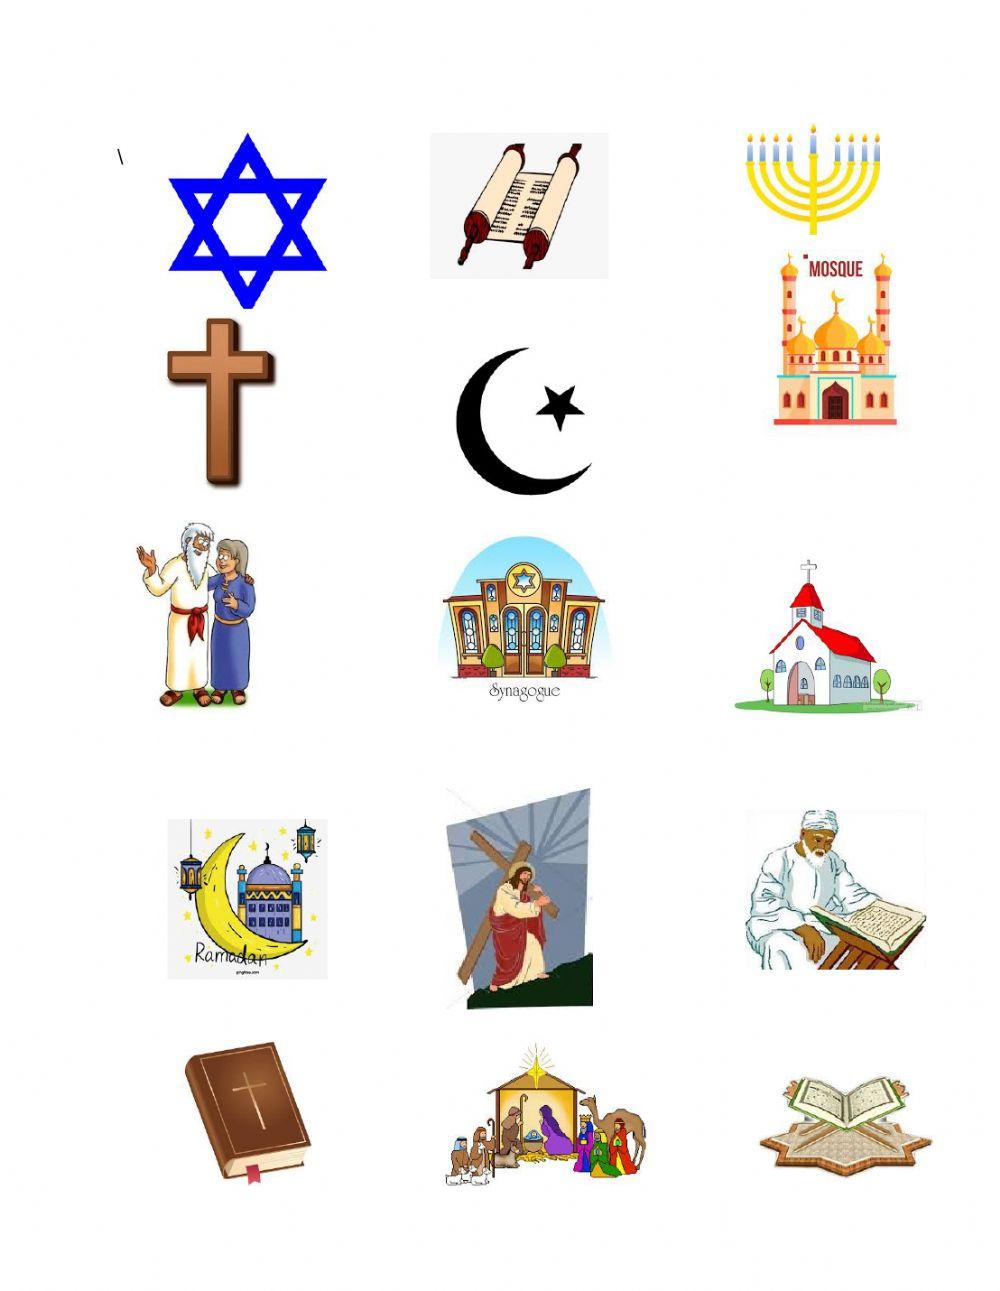 Major Religions in Europe